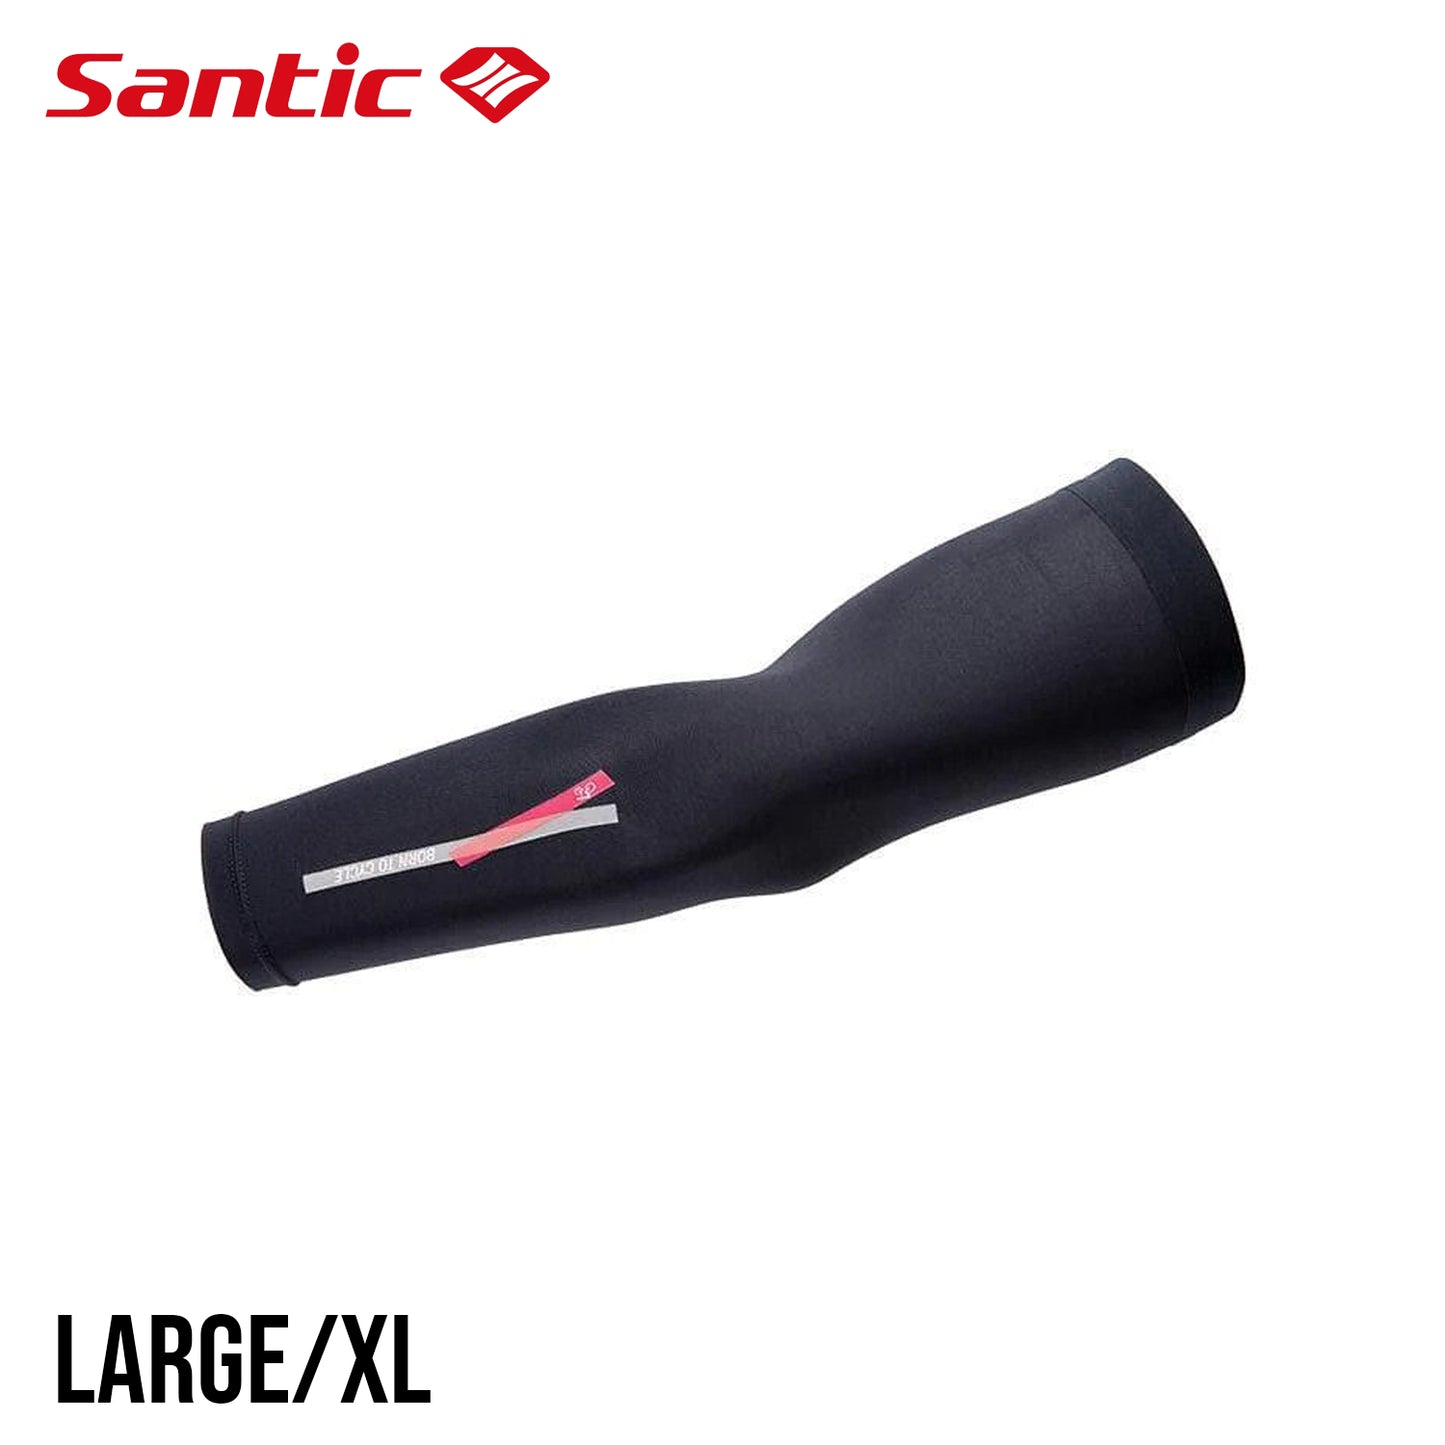 Santic Canty UPF 50+ Light Arm Sleeves - Black